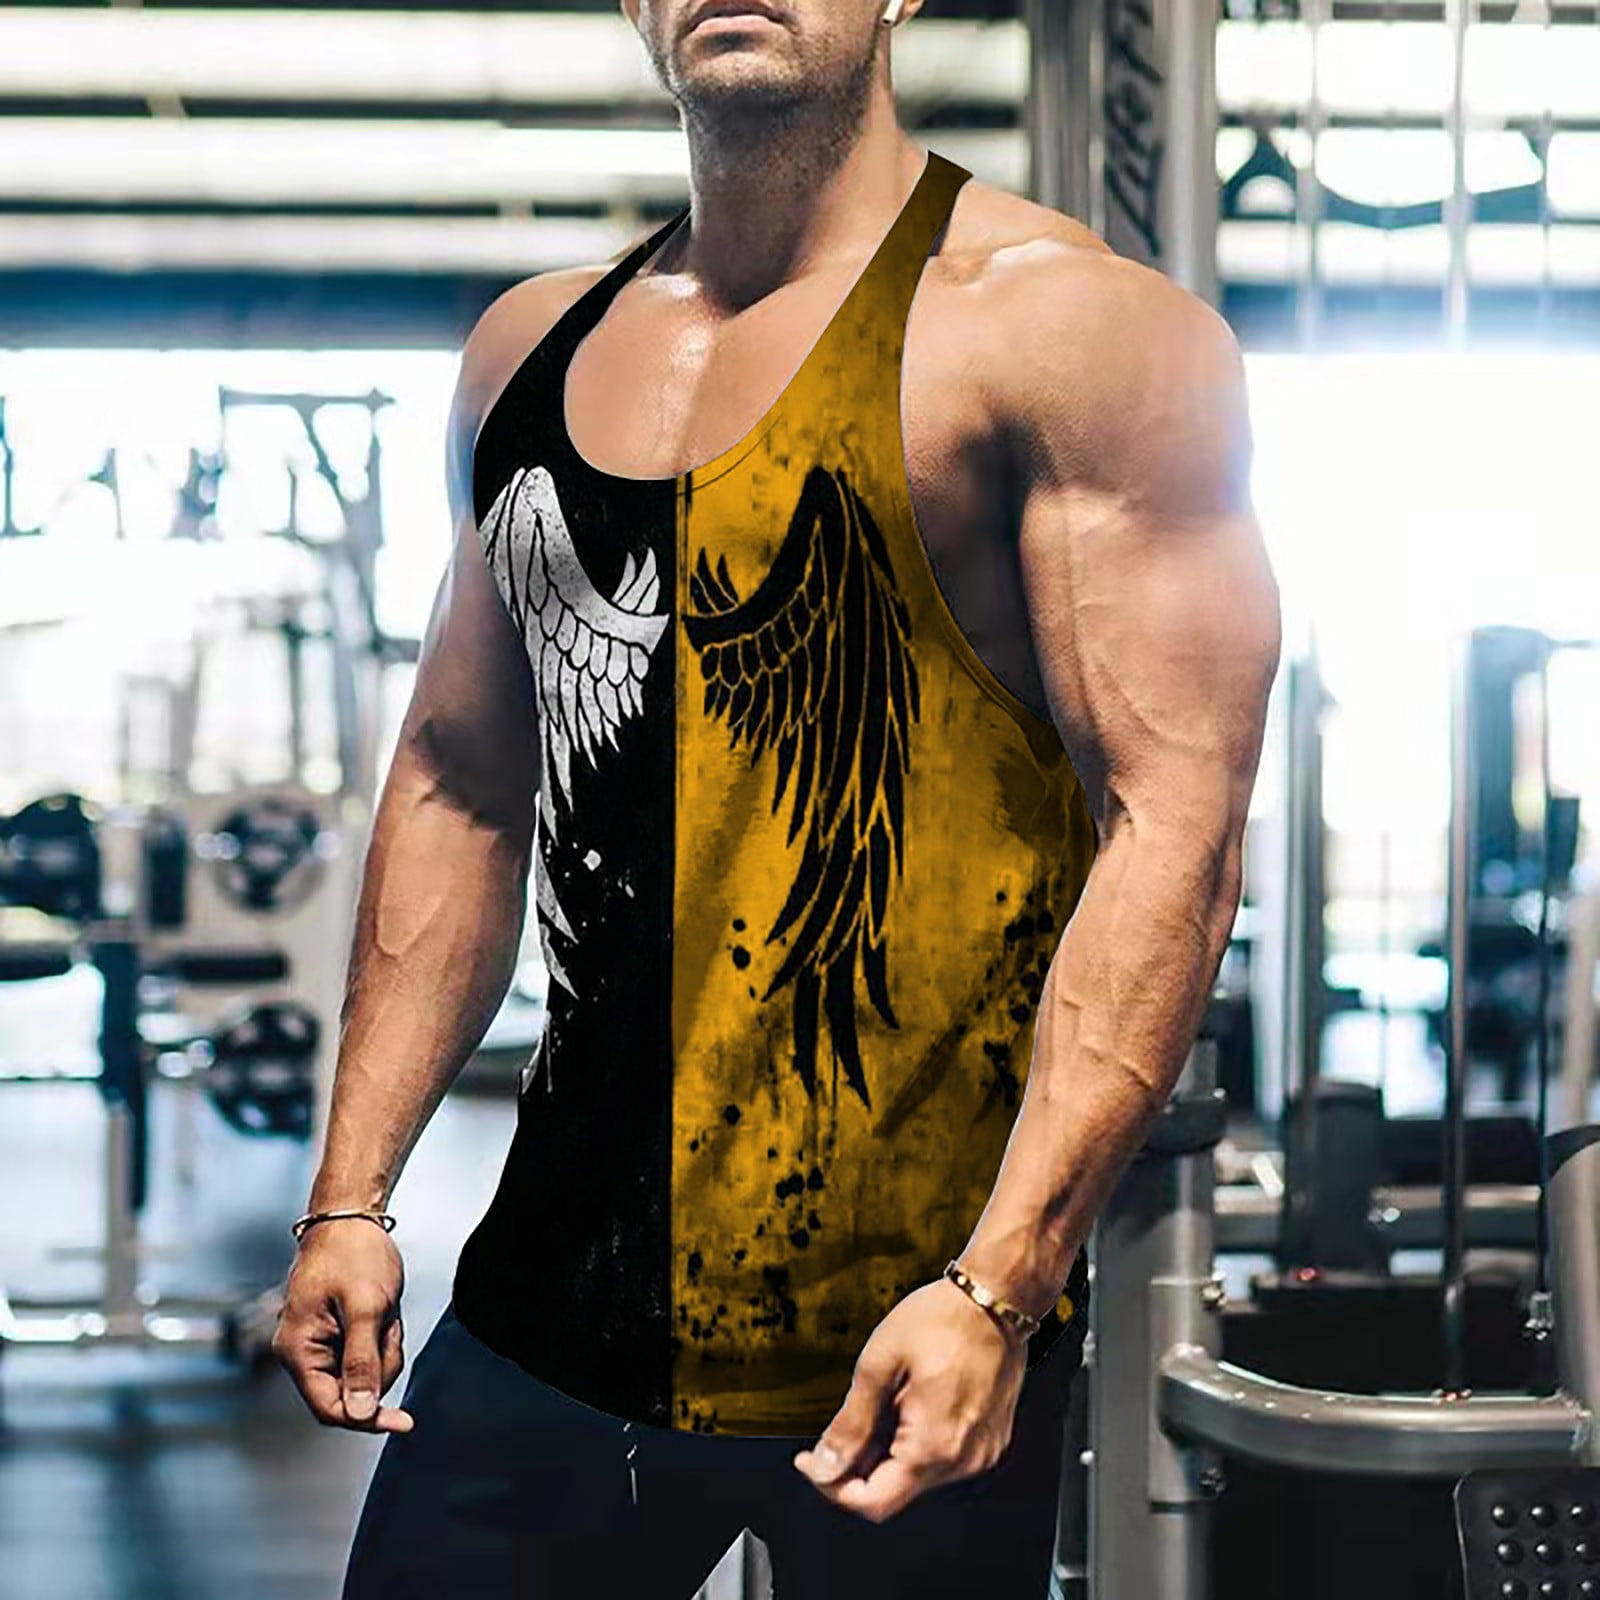 Mens Bodybuilding Tank Top Gym Workout Fitness Cotton Sleeveless